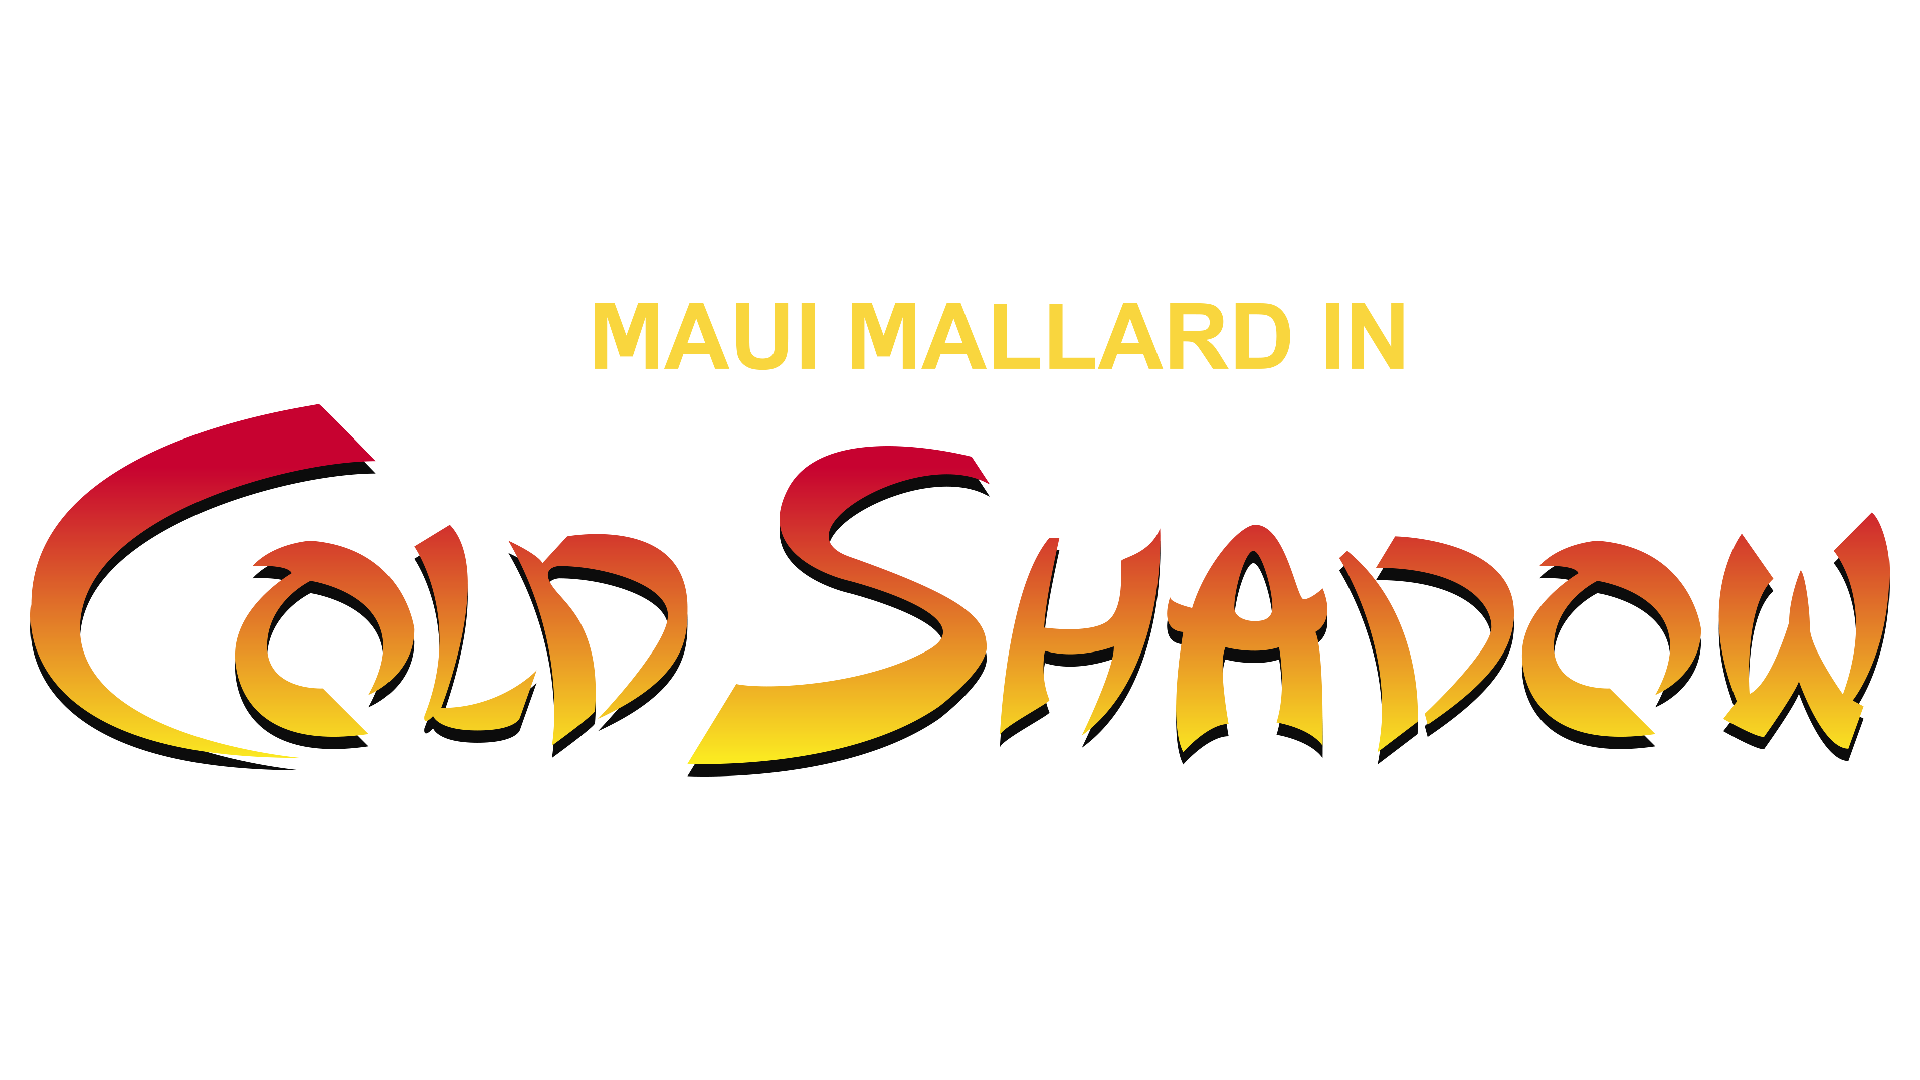 Maui Mallard in Cold Shadow Logo